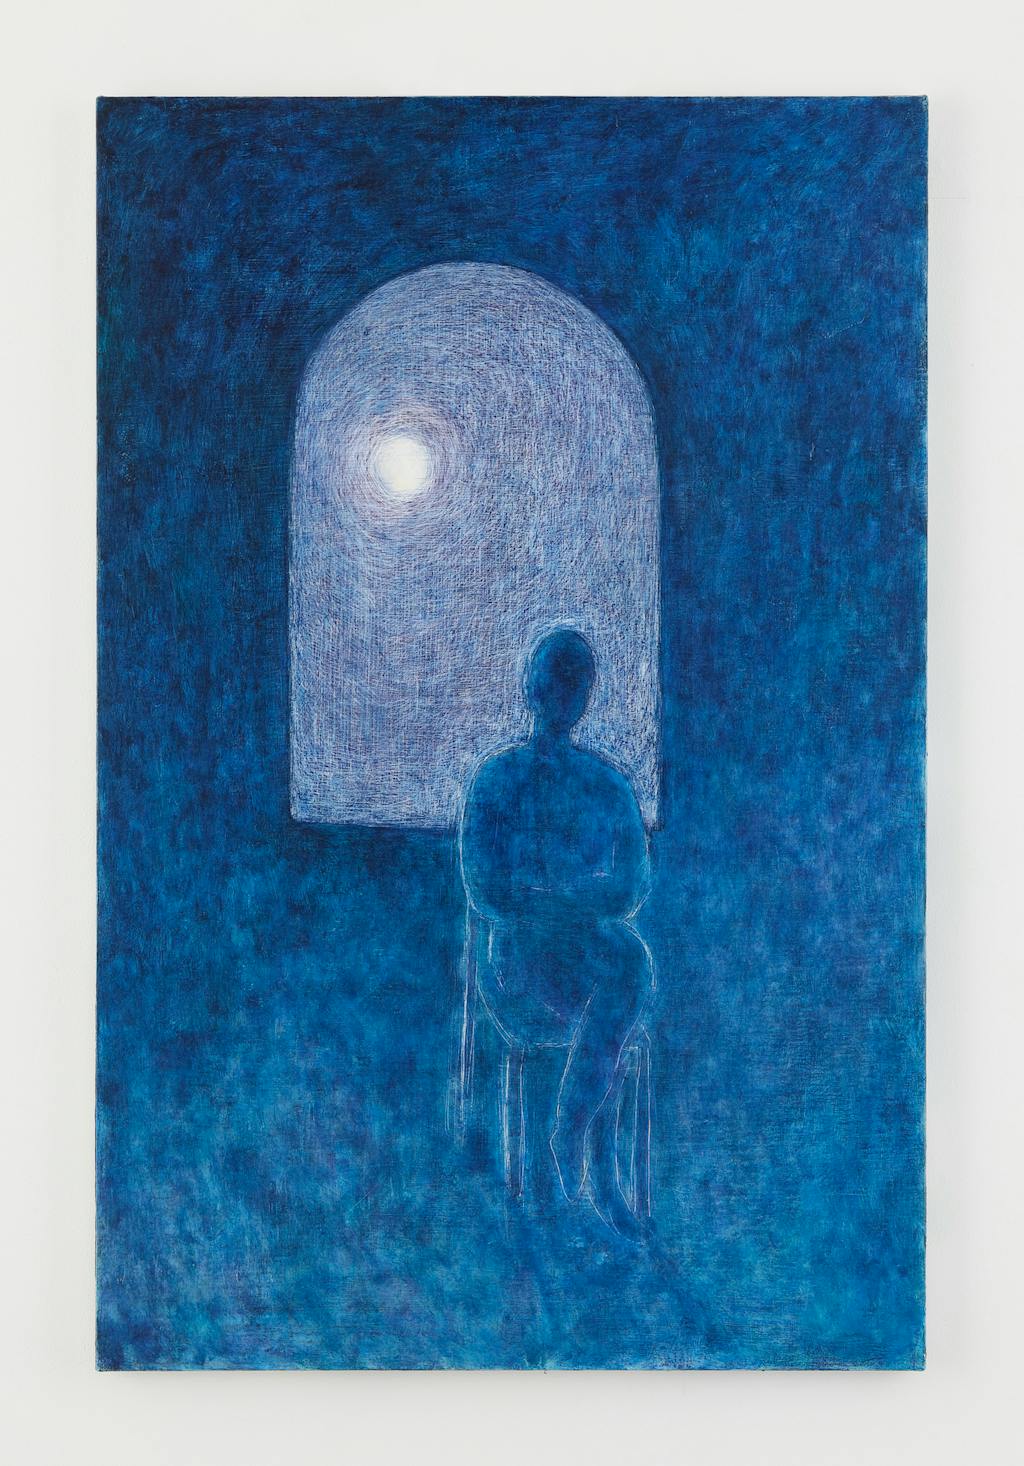 Daichi Takagi
Moonlight
2021
oil on canvas
100 x 65.2 cm - © Paris Internationale